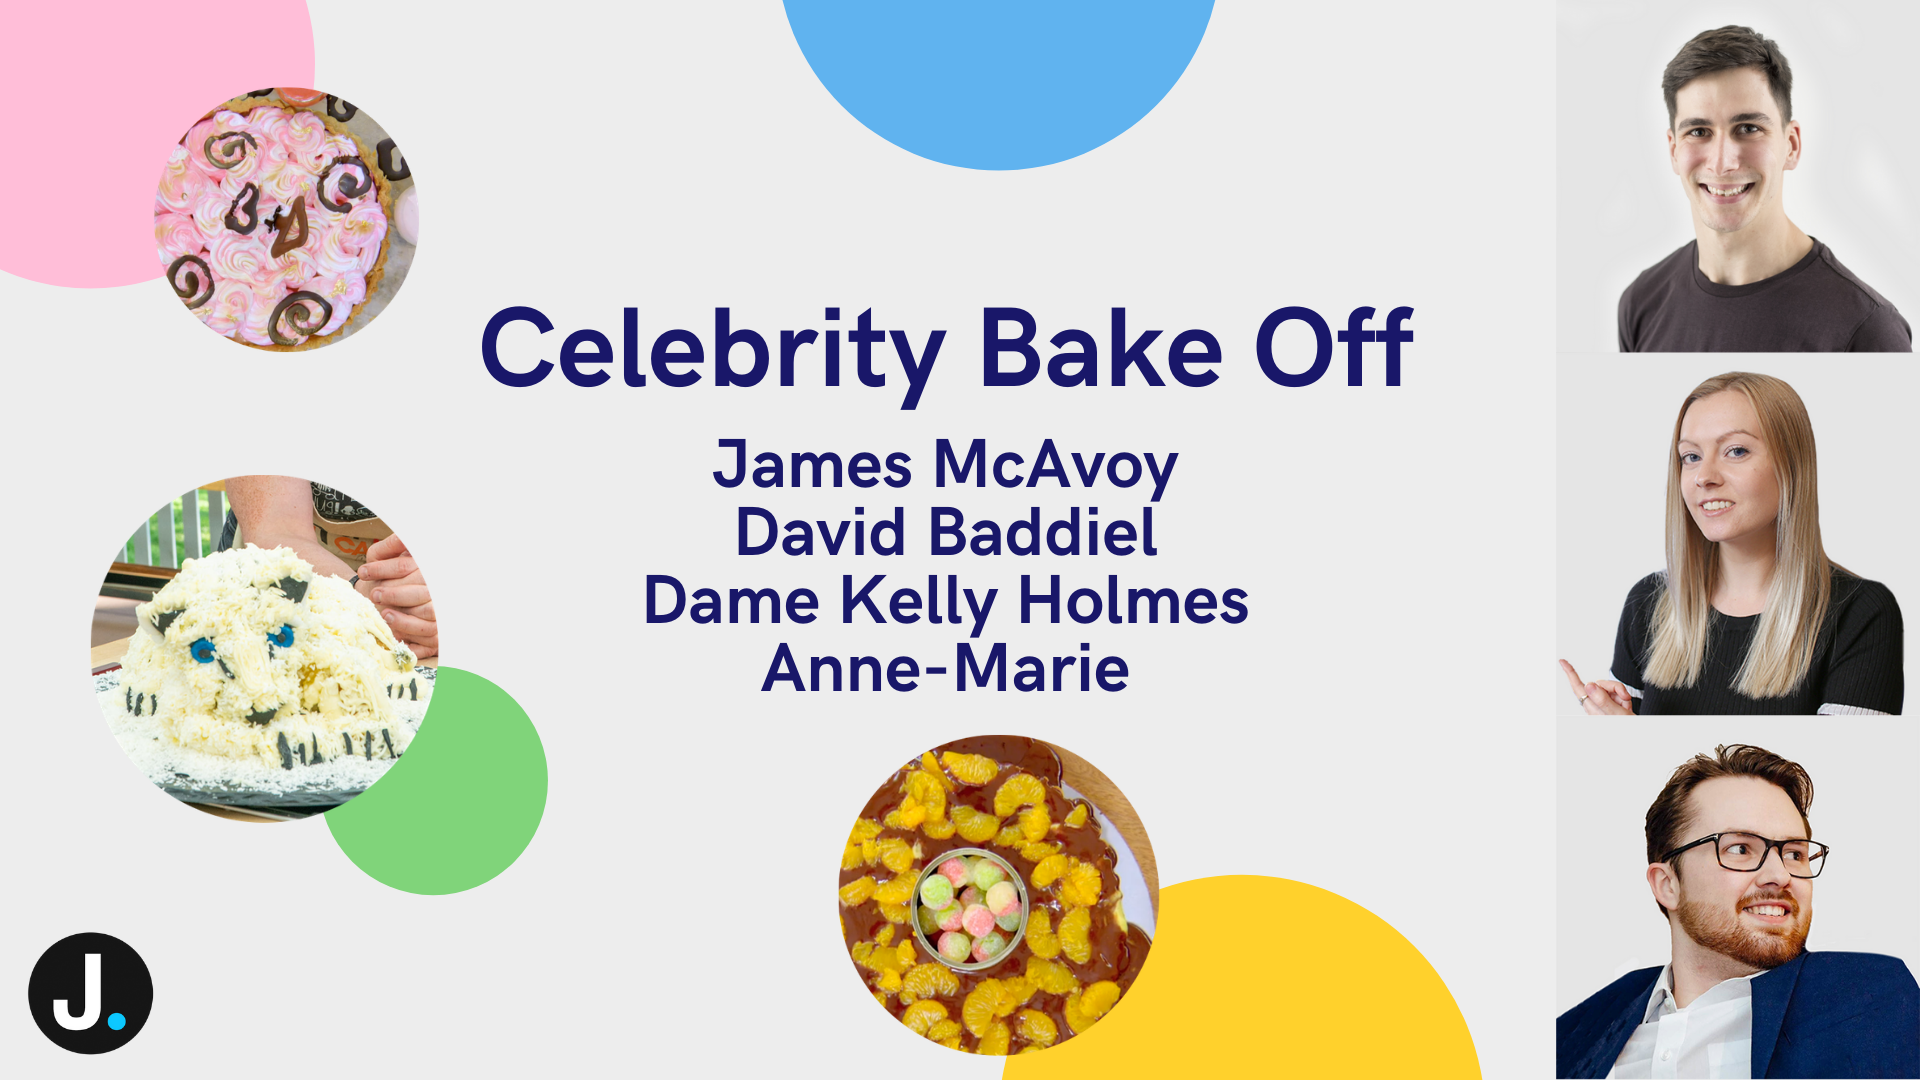 James McAvoy, David Baddiel, Kelly Holmes &amp; Anne-Marie on The Great Celebrity Bake Off - James McAvoy Bake Off